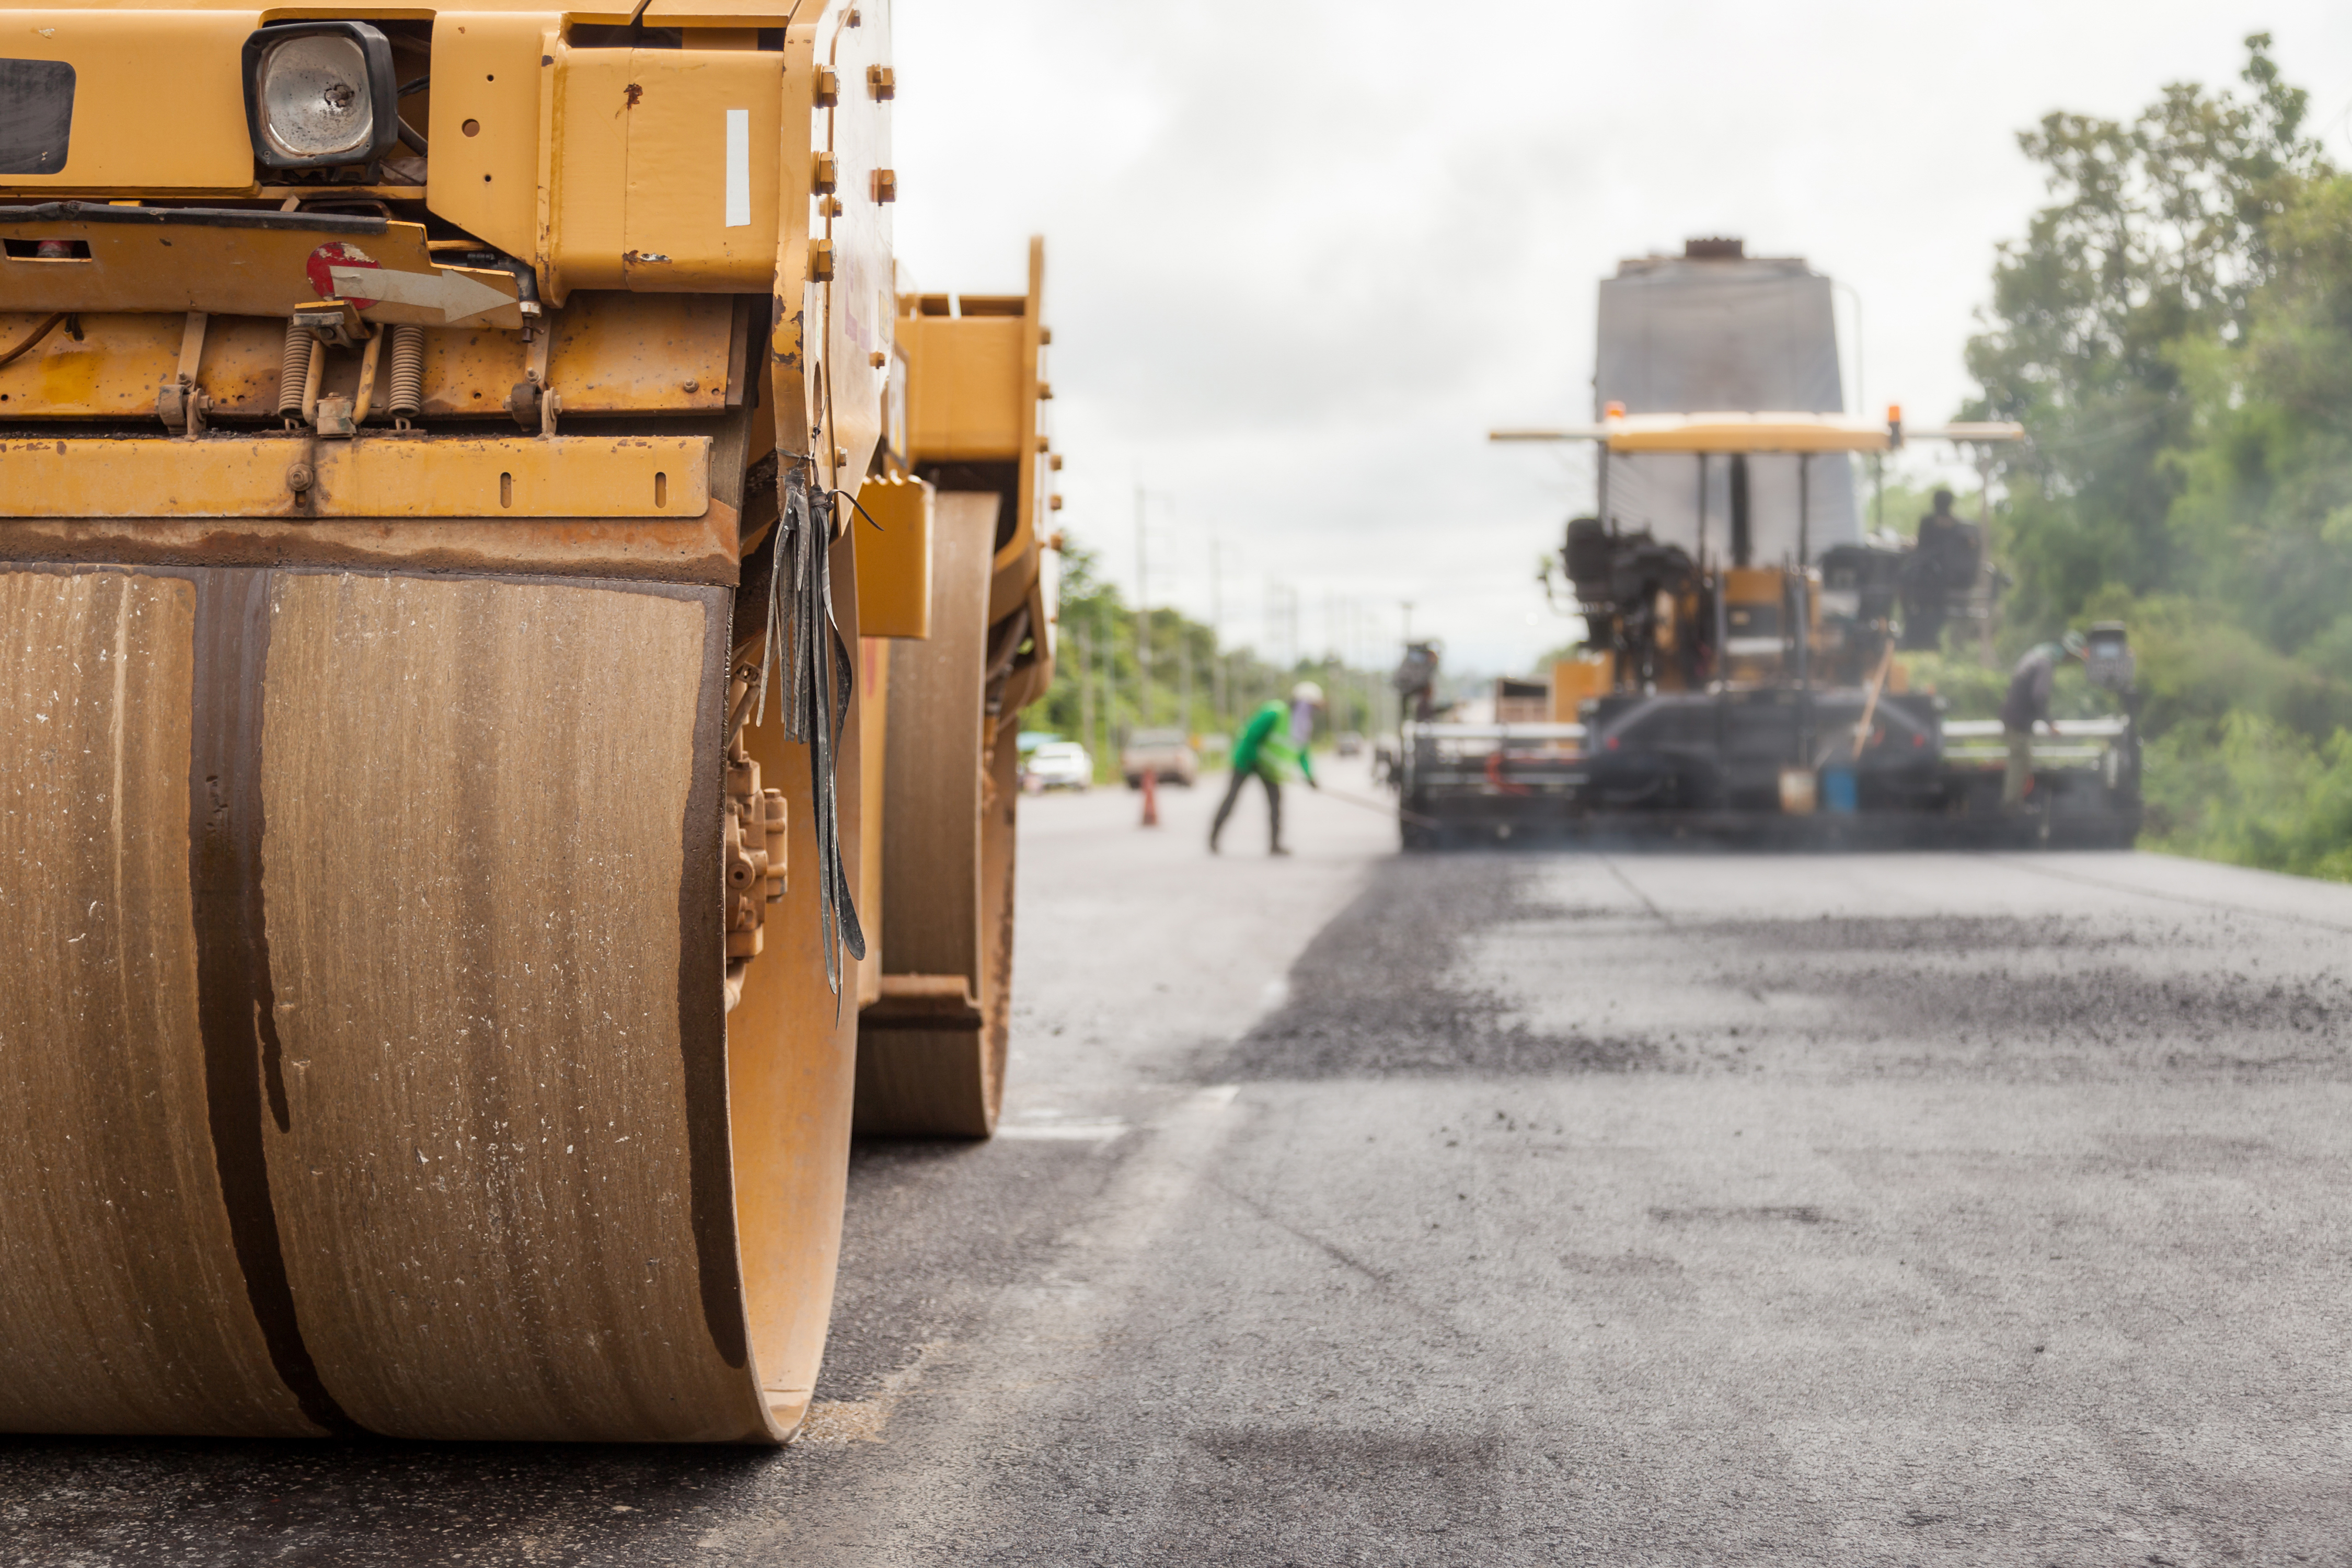 Major Road Repair Projects To Begin This Week Across Michigan